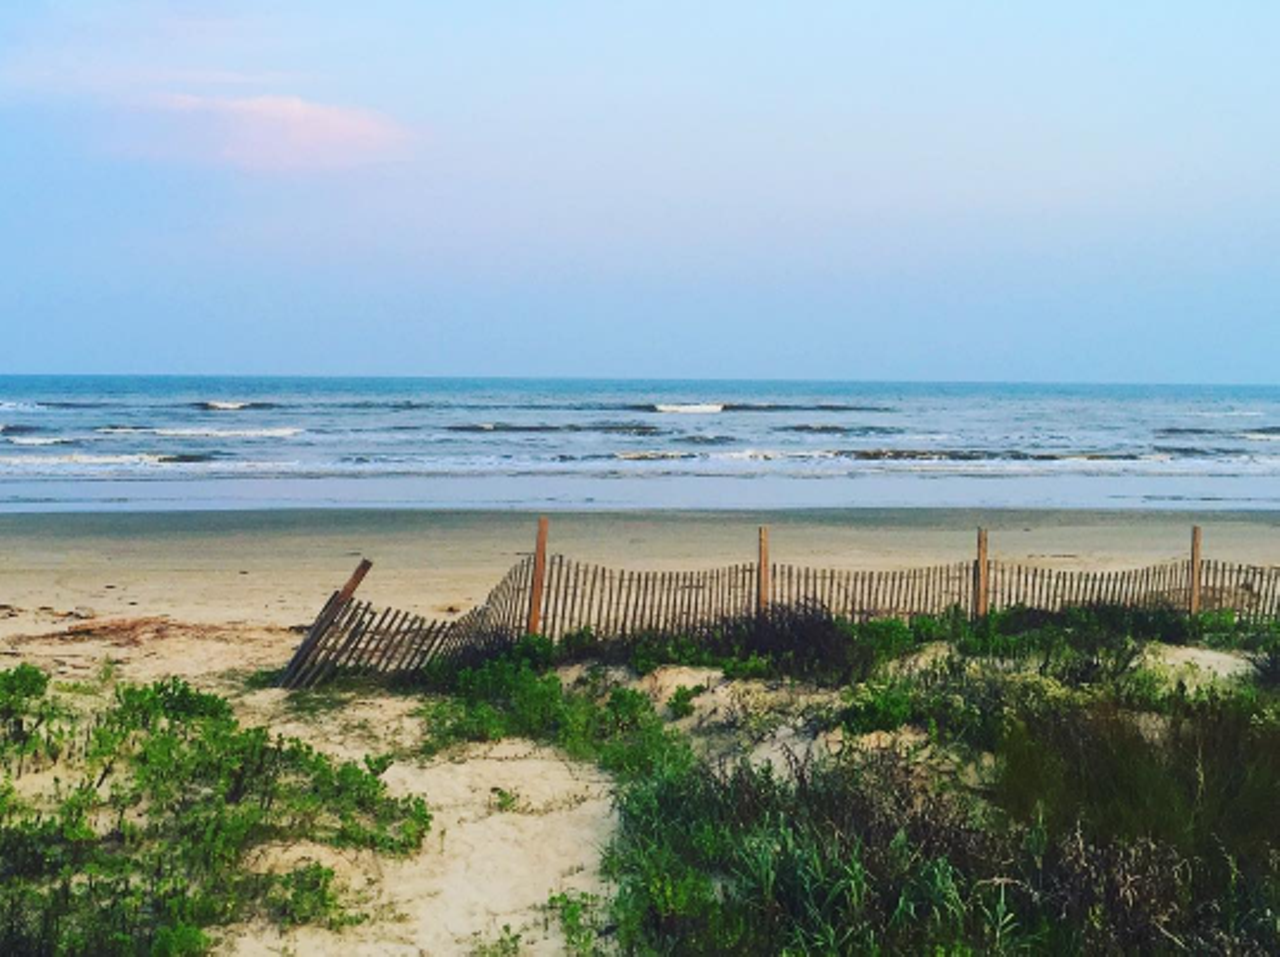 Surfside Beach
Travel time from San Antonio: 4 hours
Photo via Instagram/markdsj